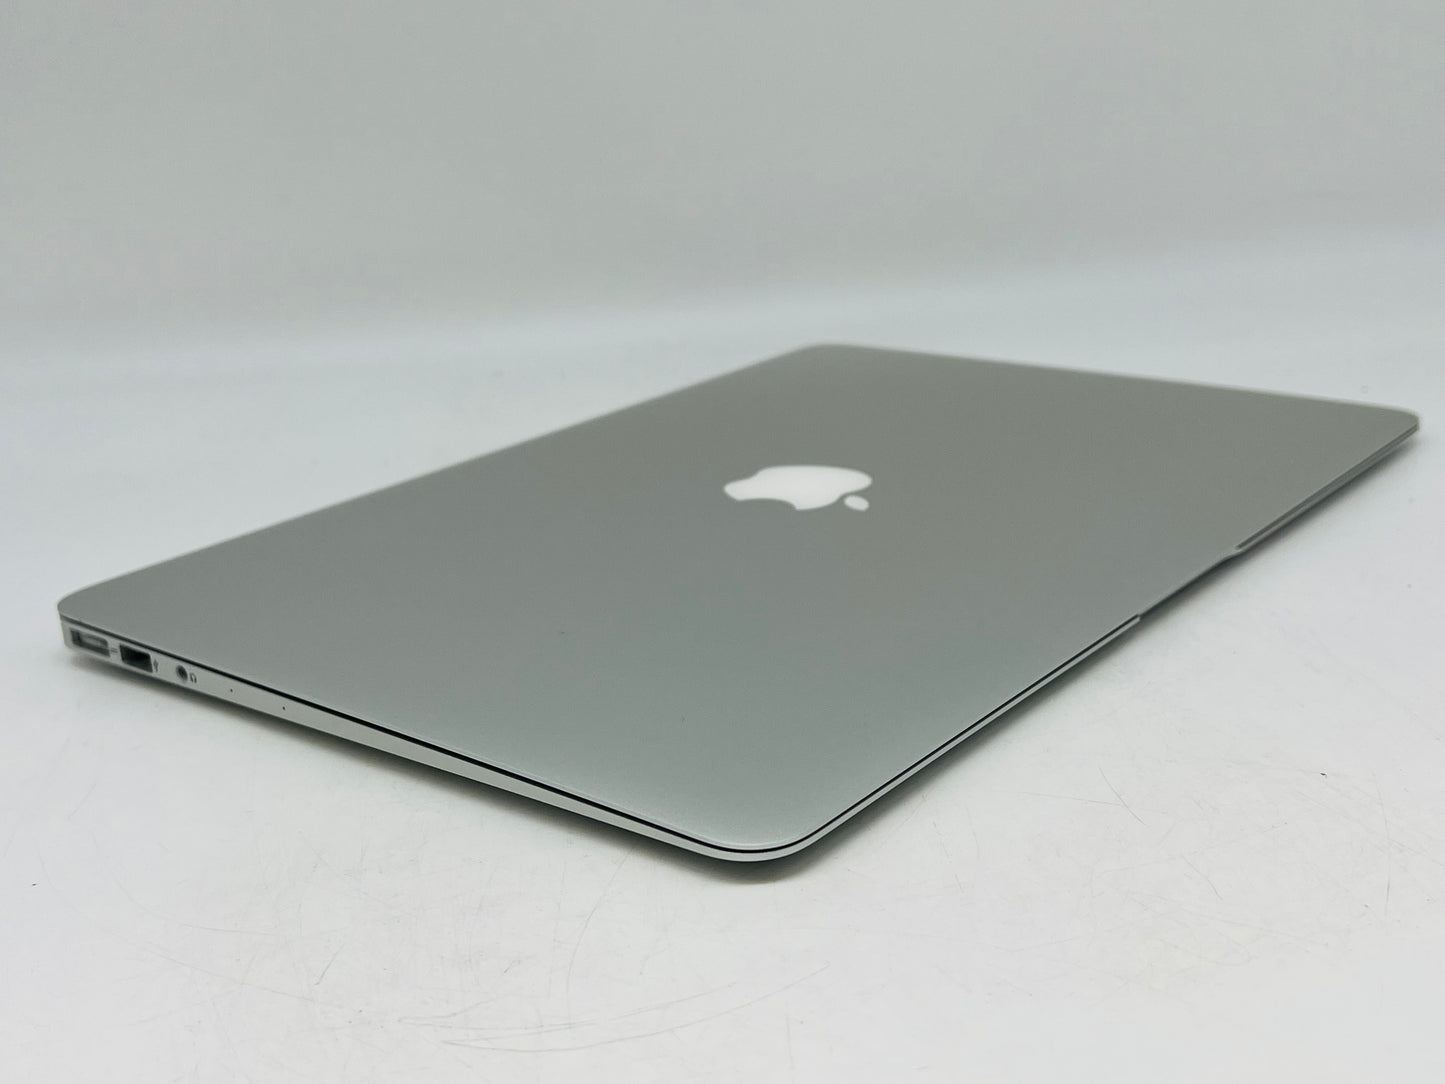 Apple 2017 MacBook Air 1.8GHz Dual-Core i5 8GB RAM 128GB SSD